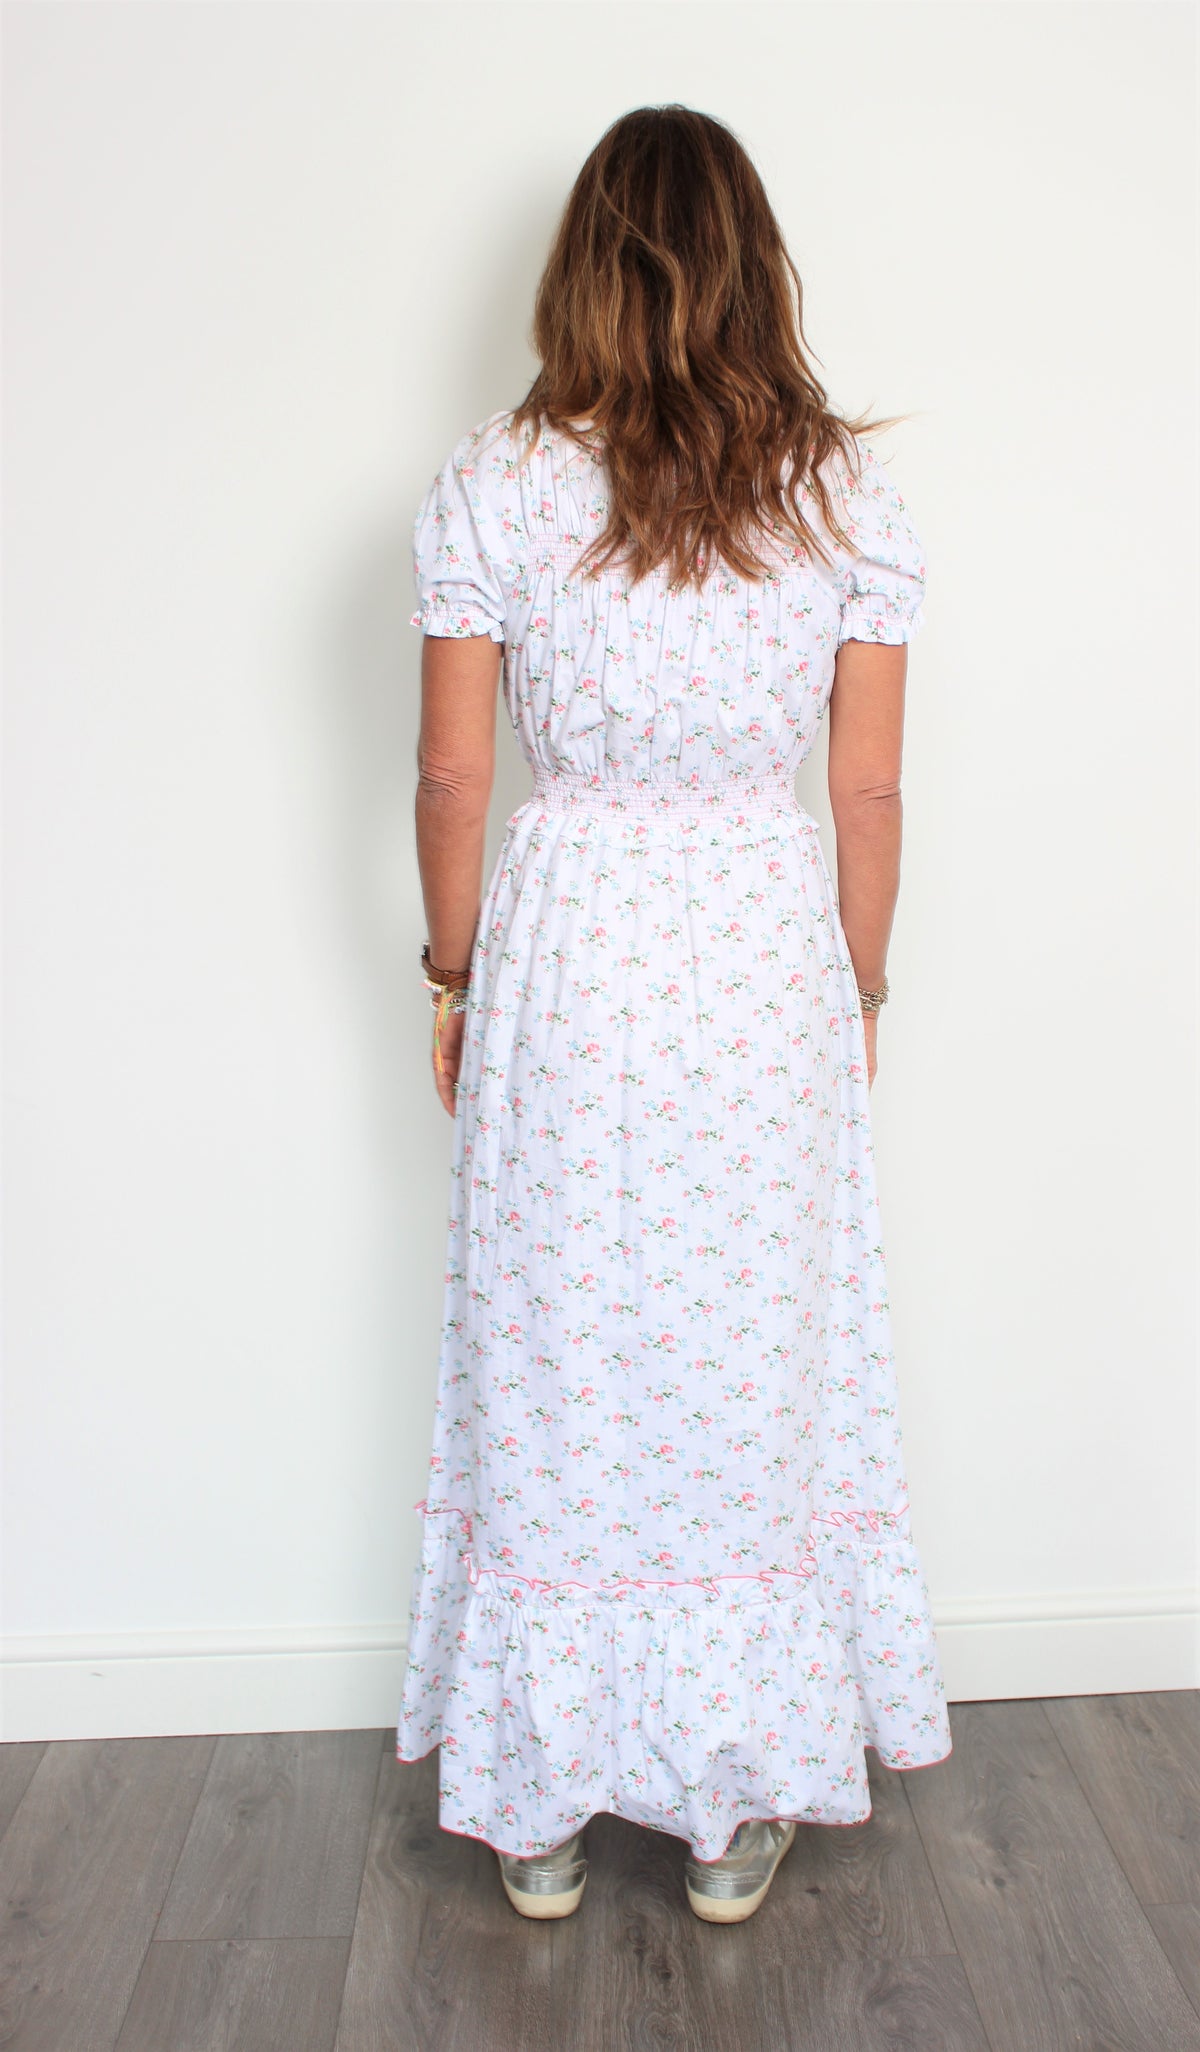 Loretta Caponi Stefania rose-print cotton maxi dress